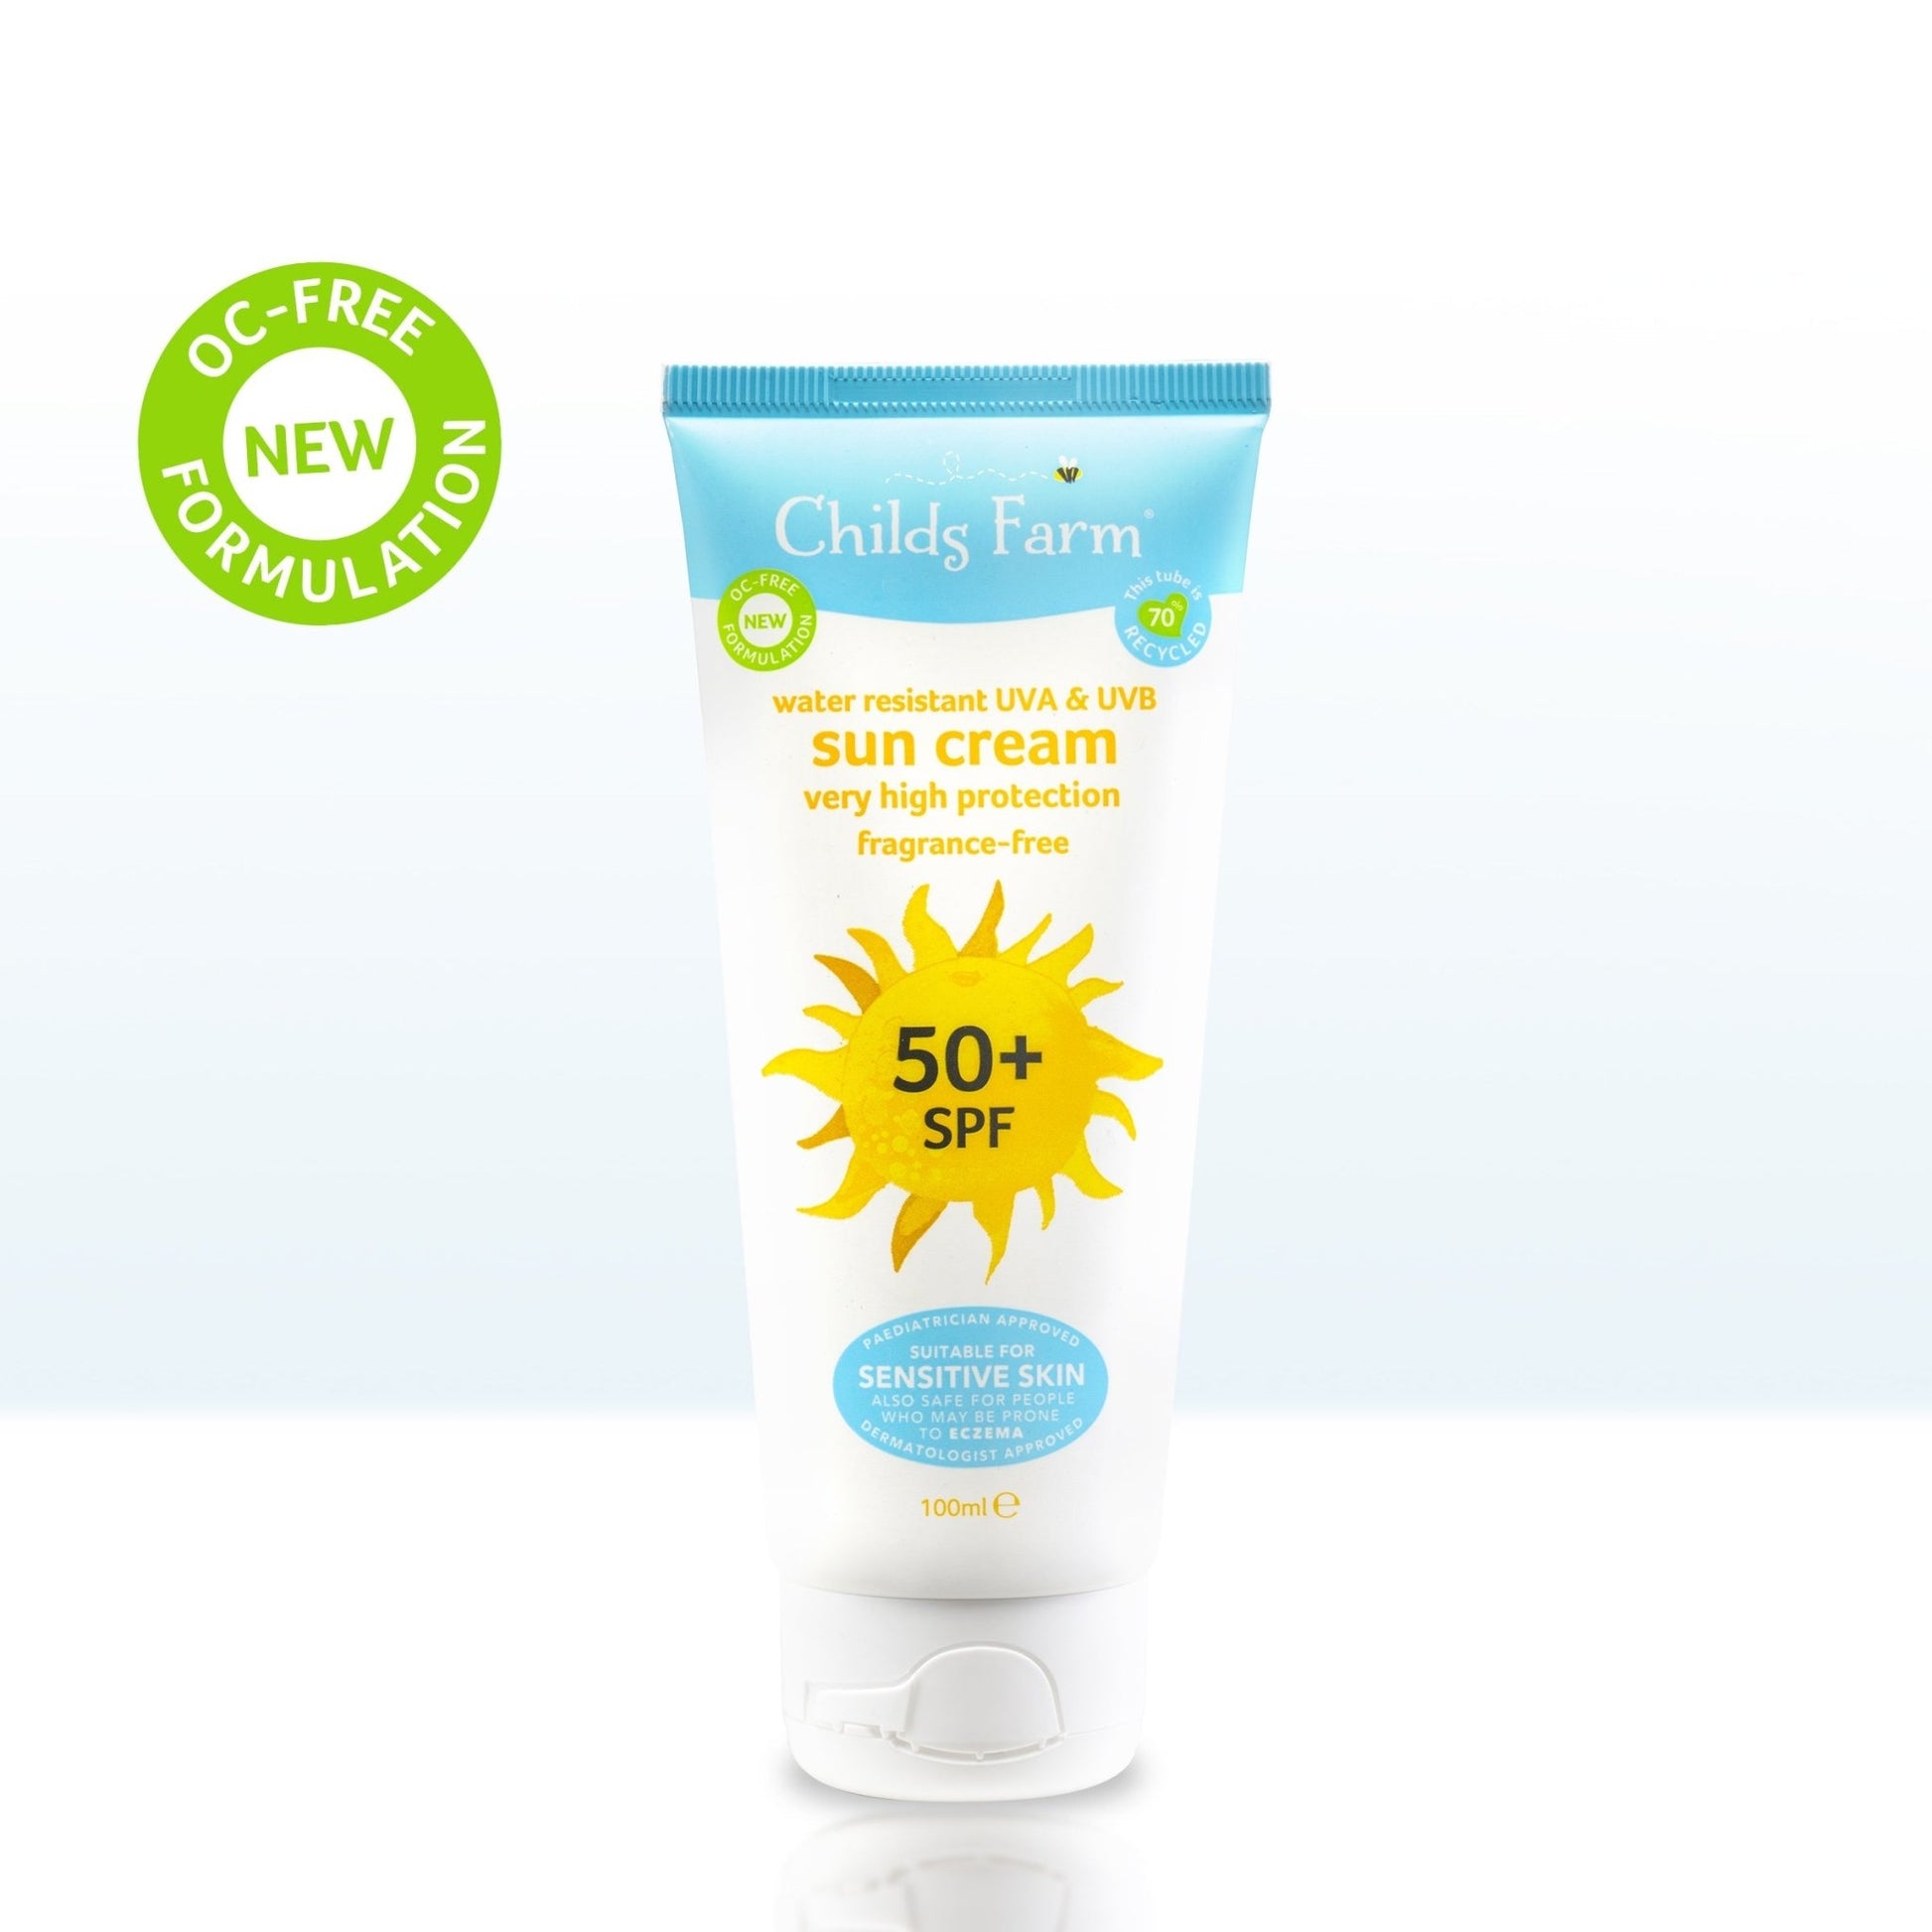 Childs Farm 50+ SPF sun cream fragrance-free (DACH)